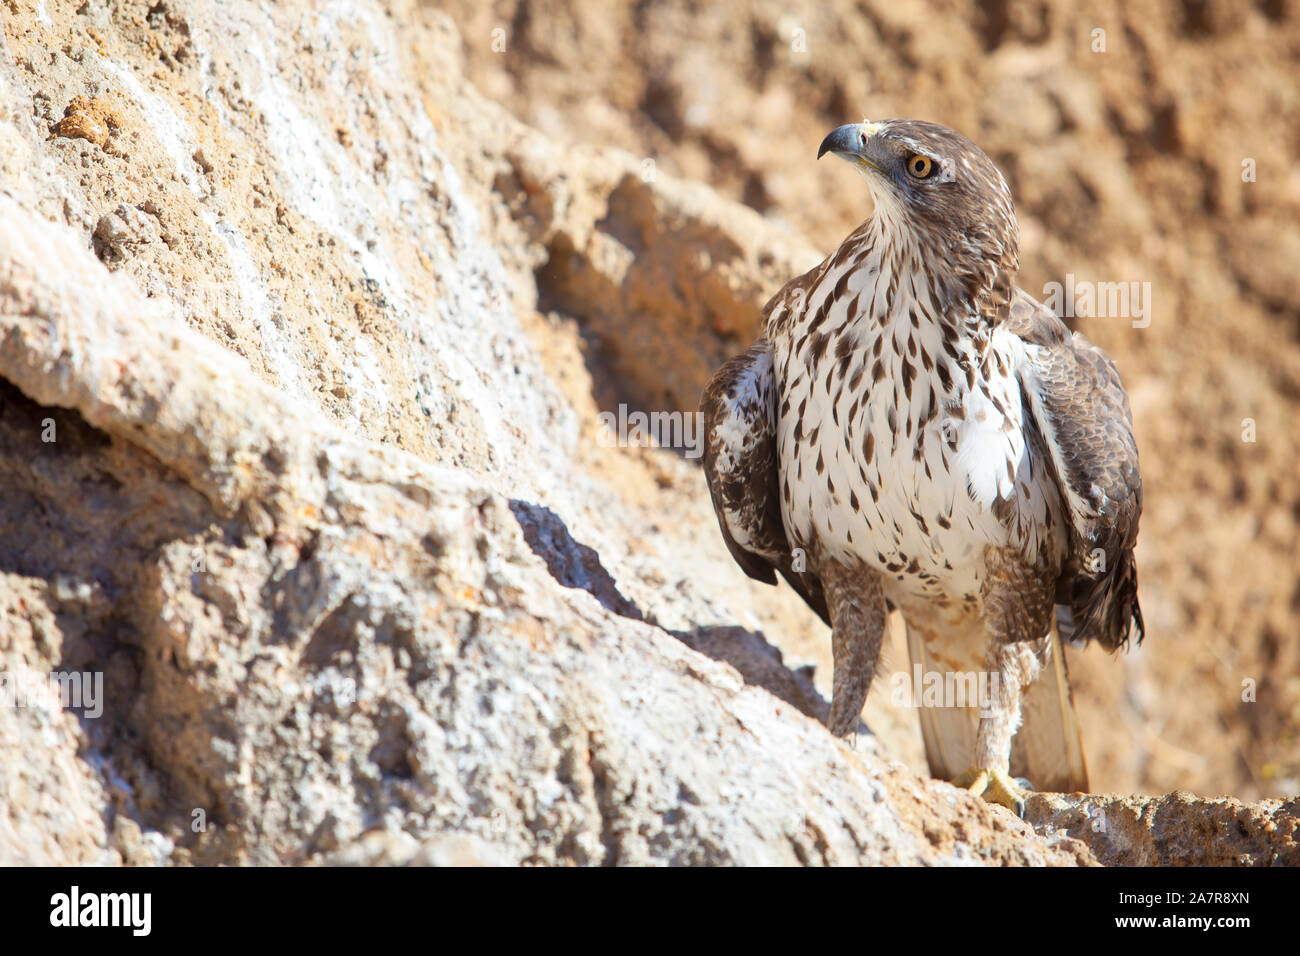 Bonellis Adler oder Aquila fasciata thront auf einem Felshang. Abendaufnahme Stockfoto